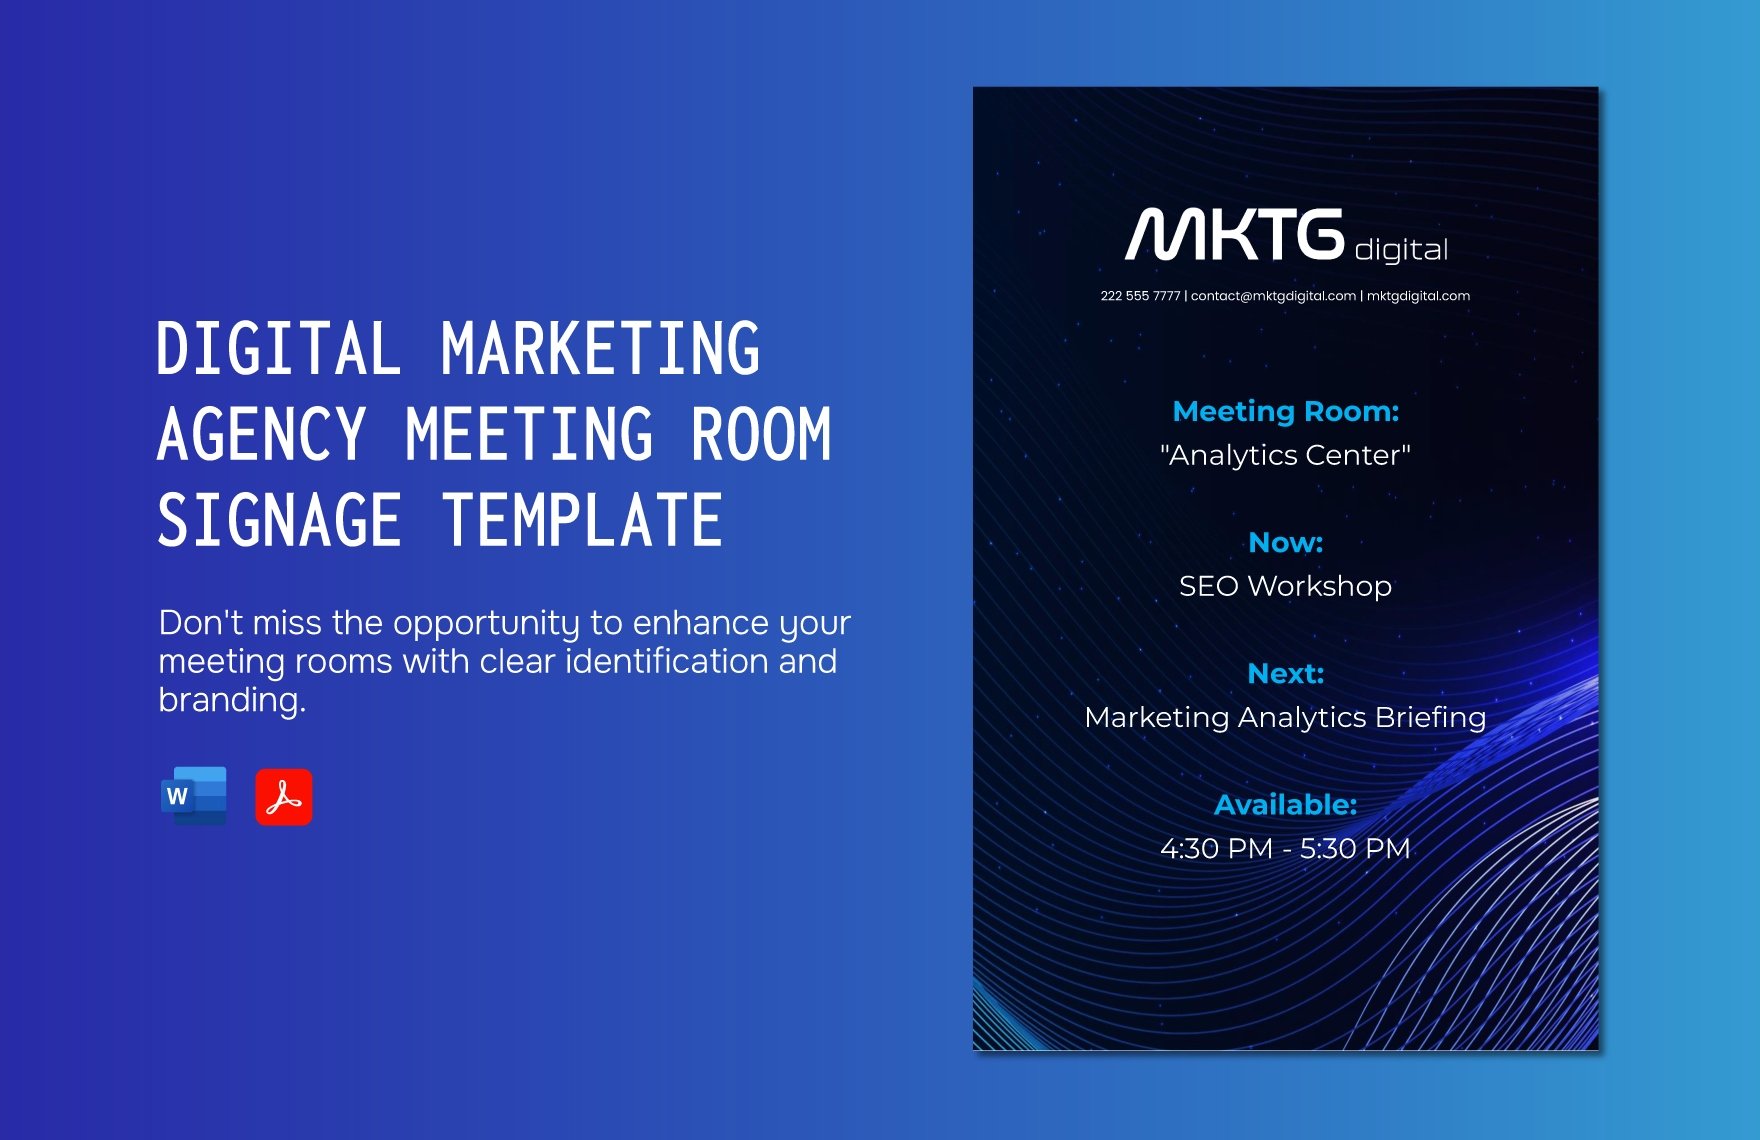 Digital Marketing Agency Meeting Room Signage Template